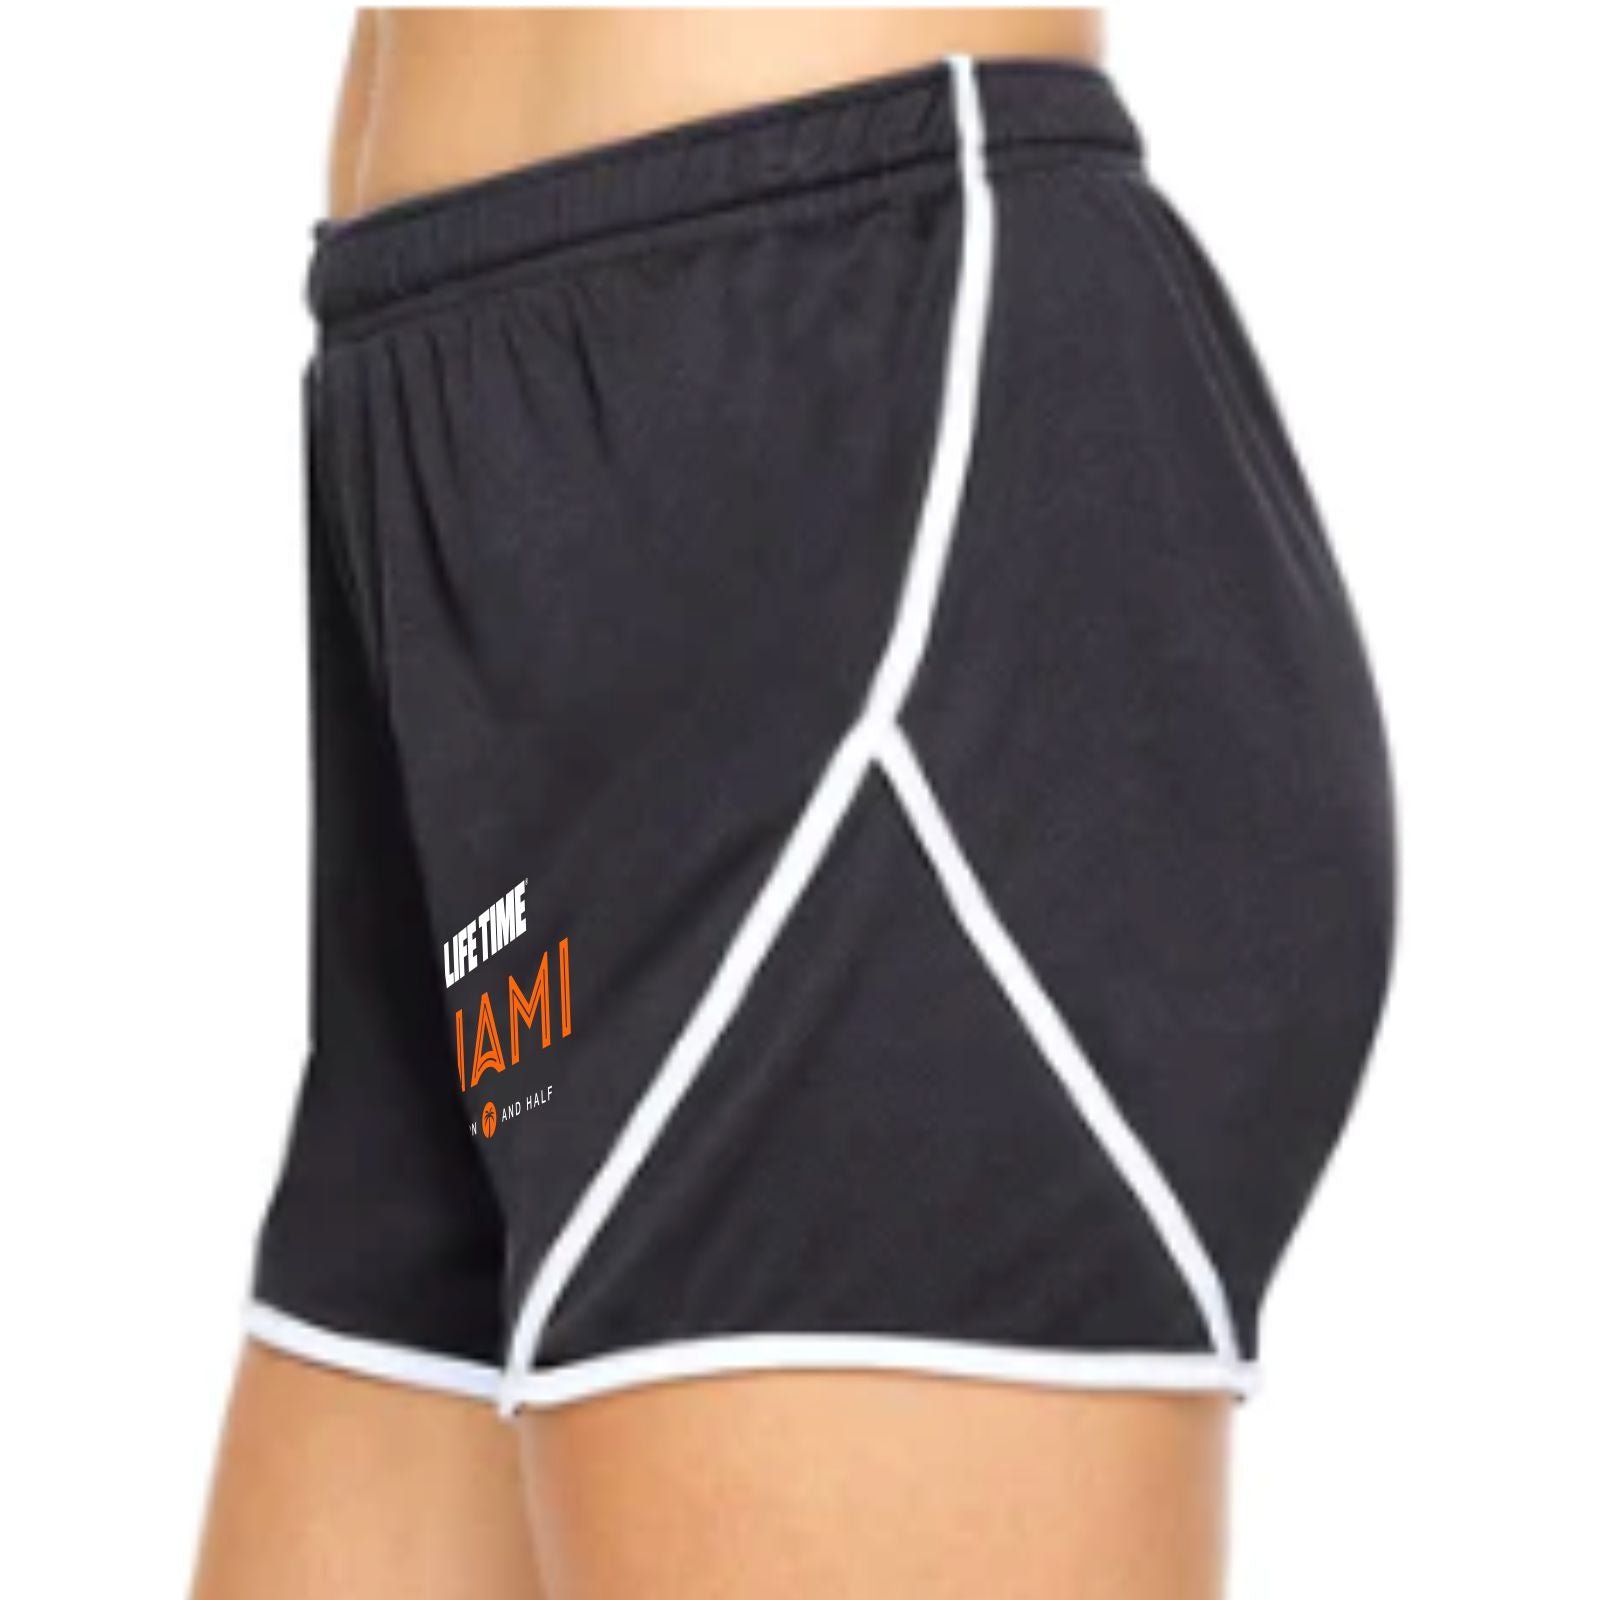 Women's Gym 3" Shorts -Black/White- Logo